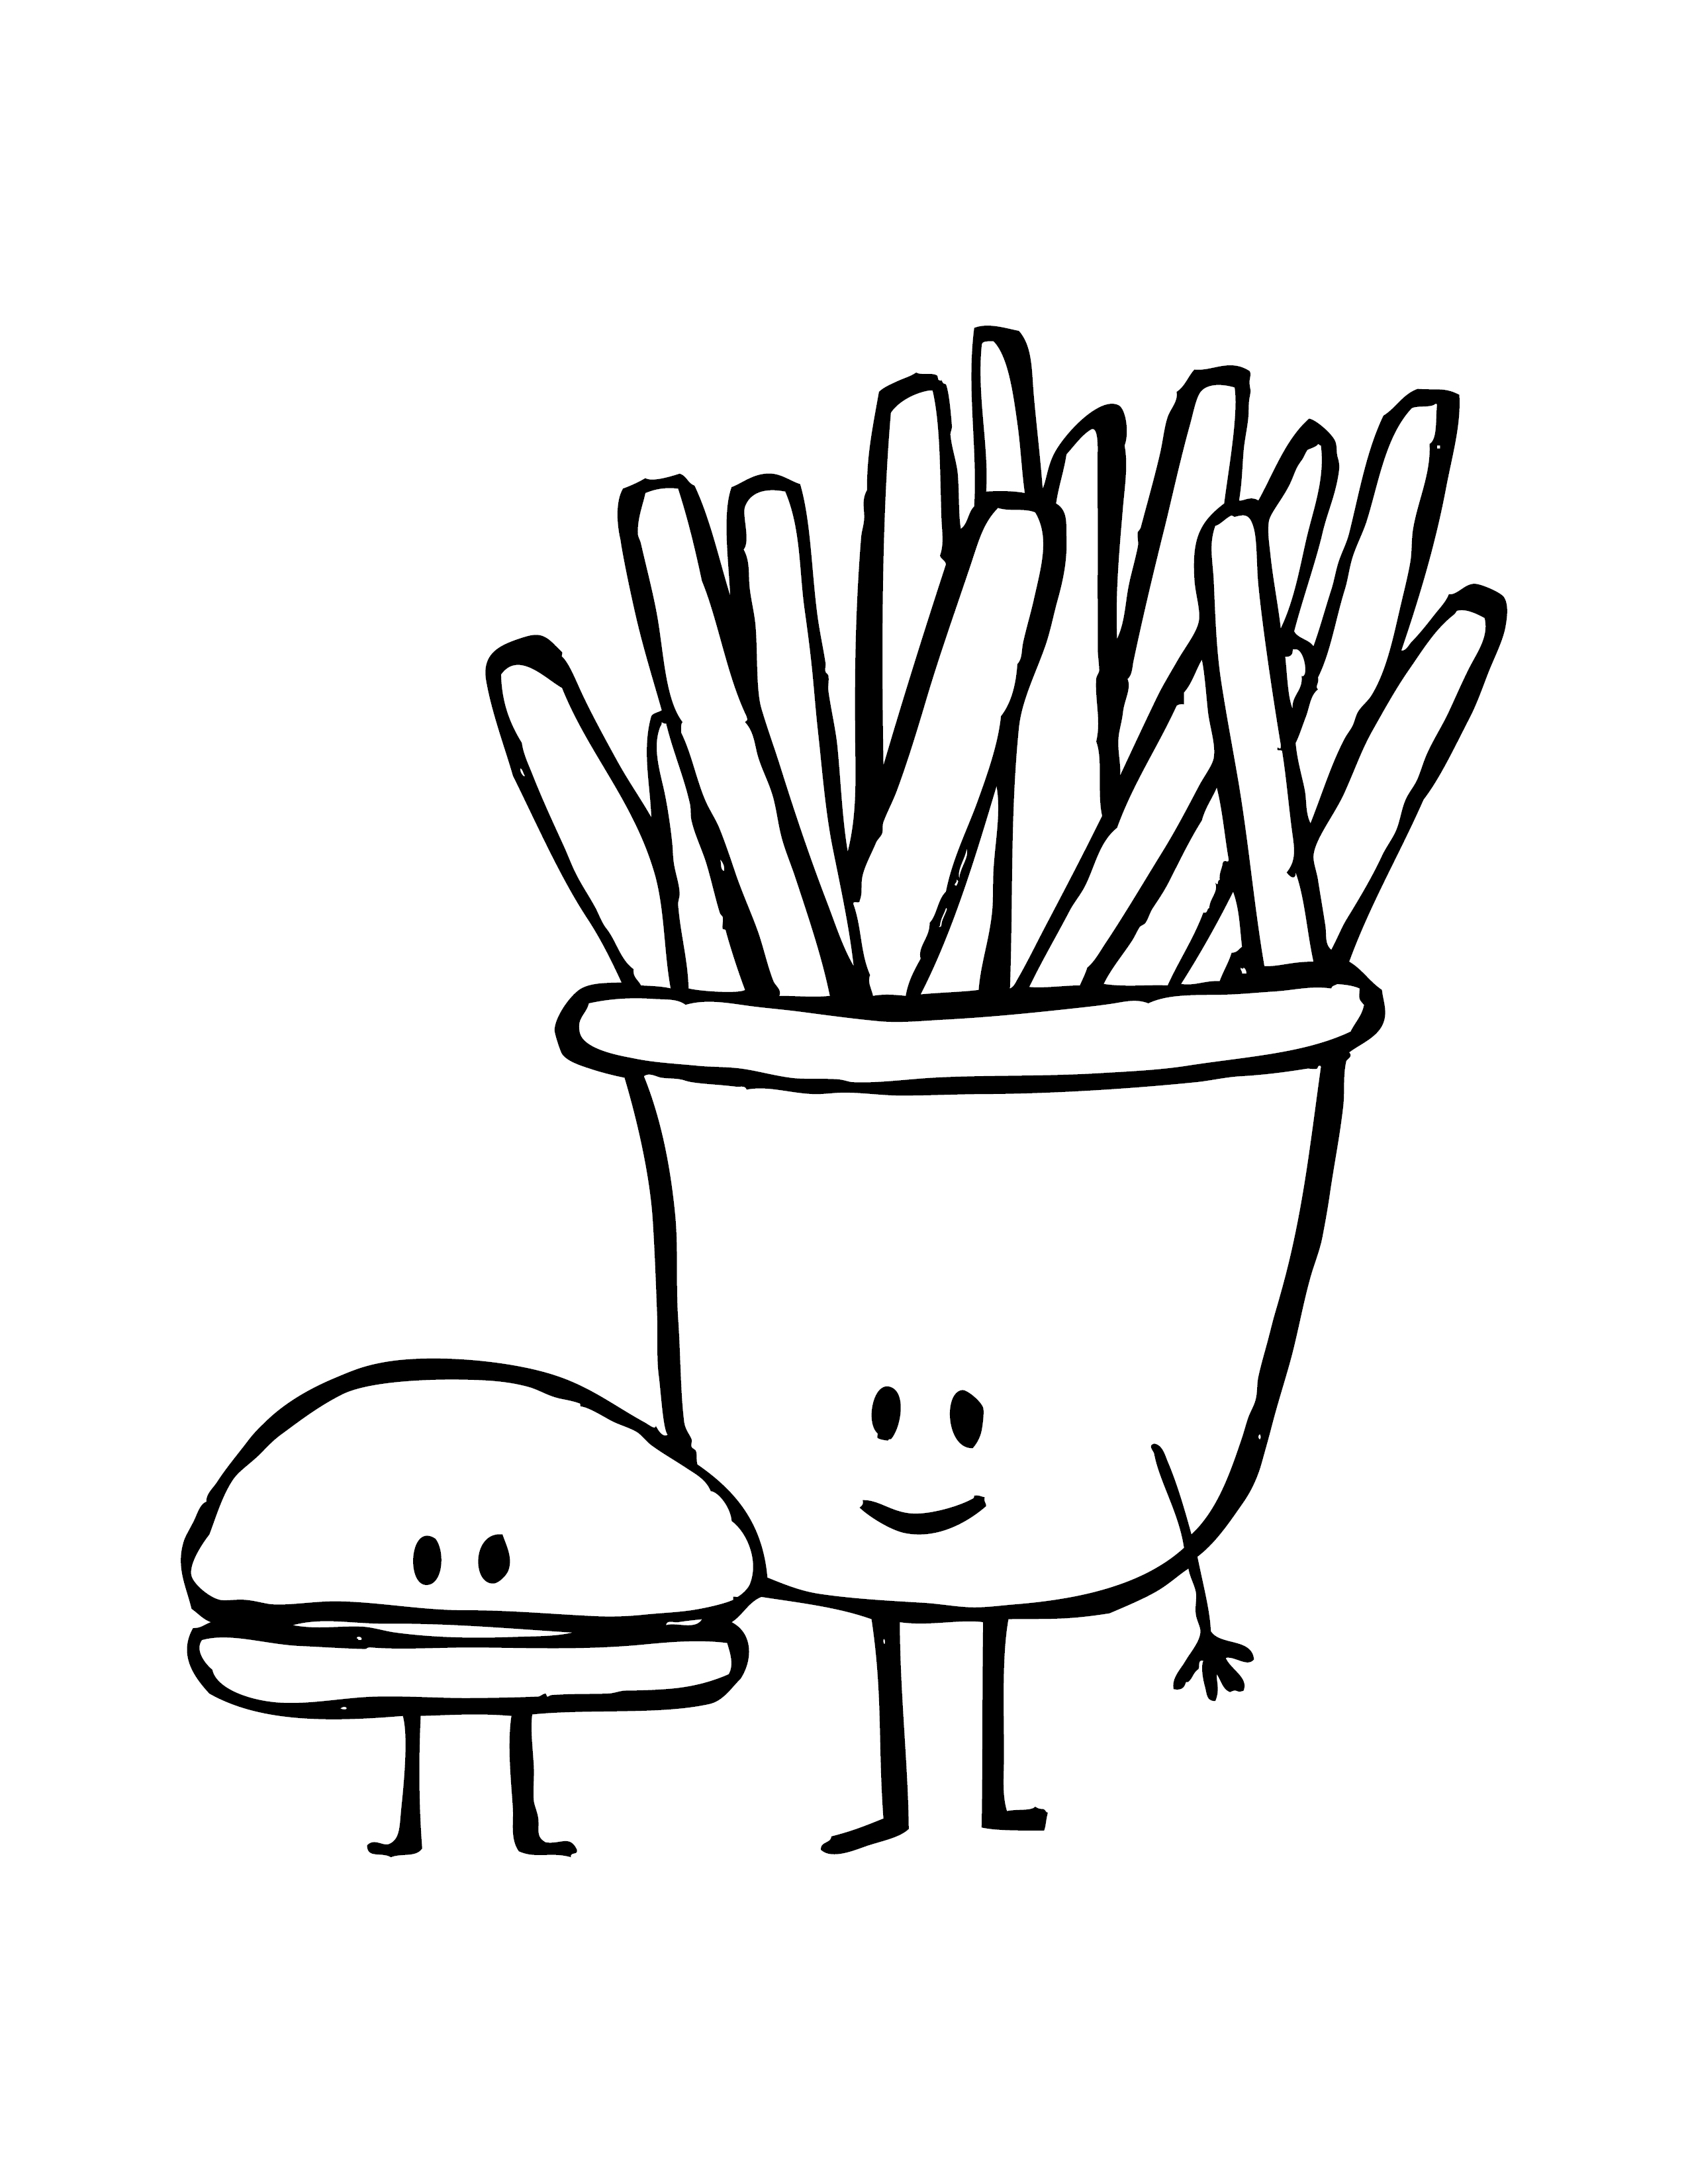 Еда карандашом легко. Рисунки для срисовки еда. Рисунки для срисовки лёгкие еда. Рисунок еда для срисовки легкий.